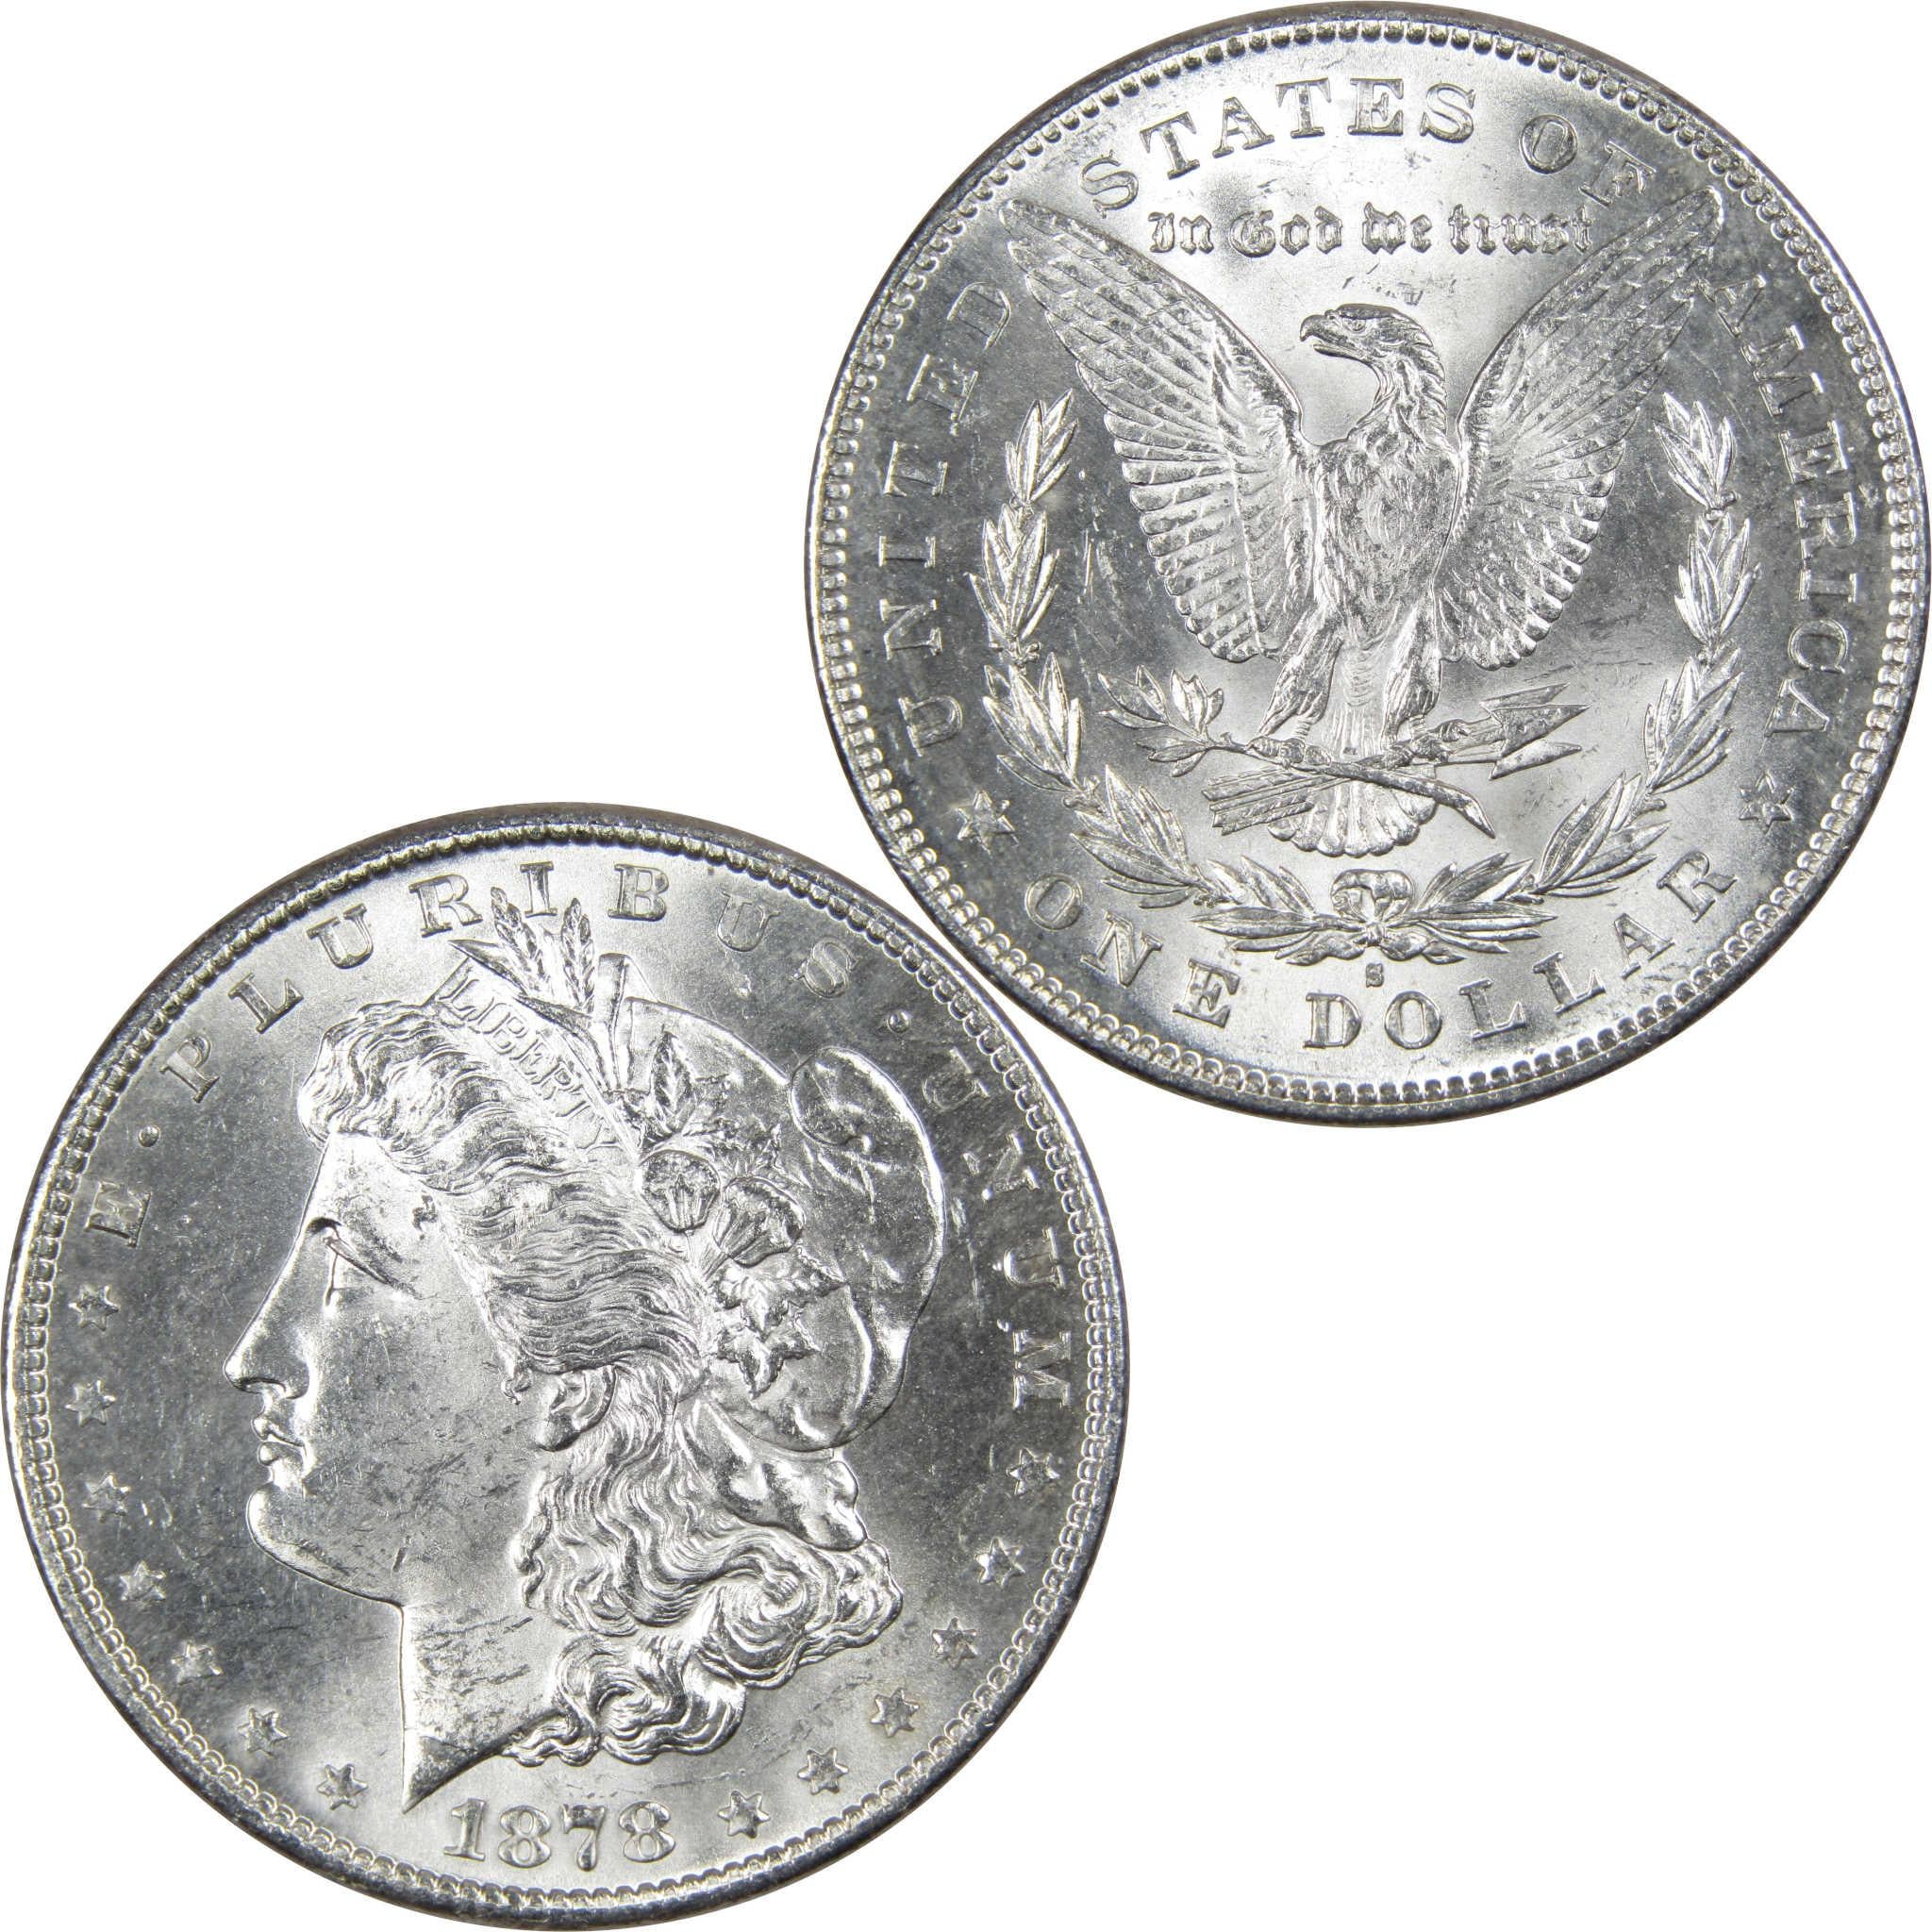 1878 S Morgan Dollar BU Uncirculated Mint State 90% Silver $1 US Coin - Morgan coin - Morgan silver dollar - Morgan silver dollar for sale - Profile Coins &amp; Collectibles